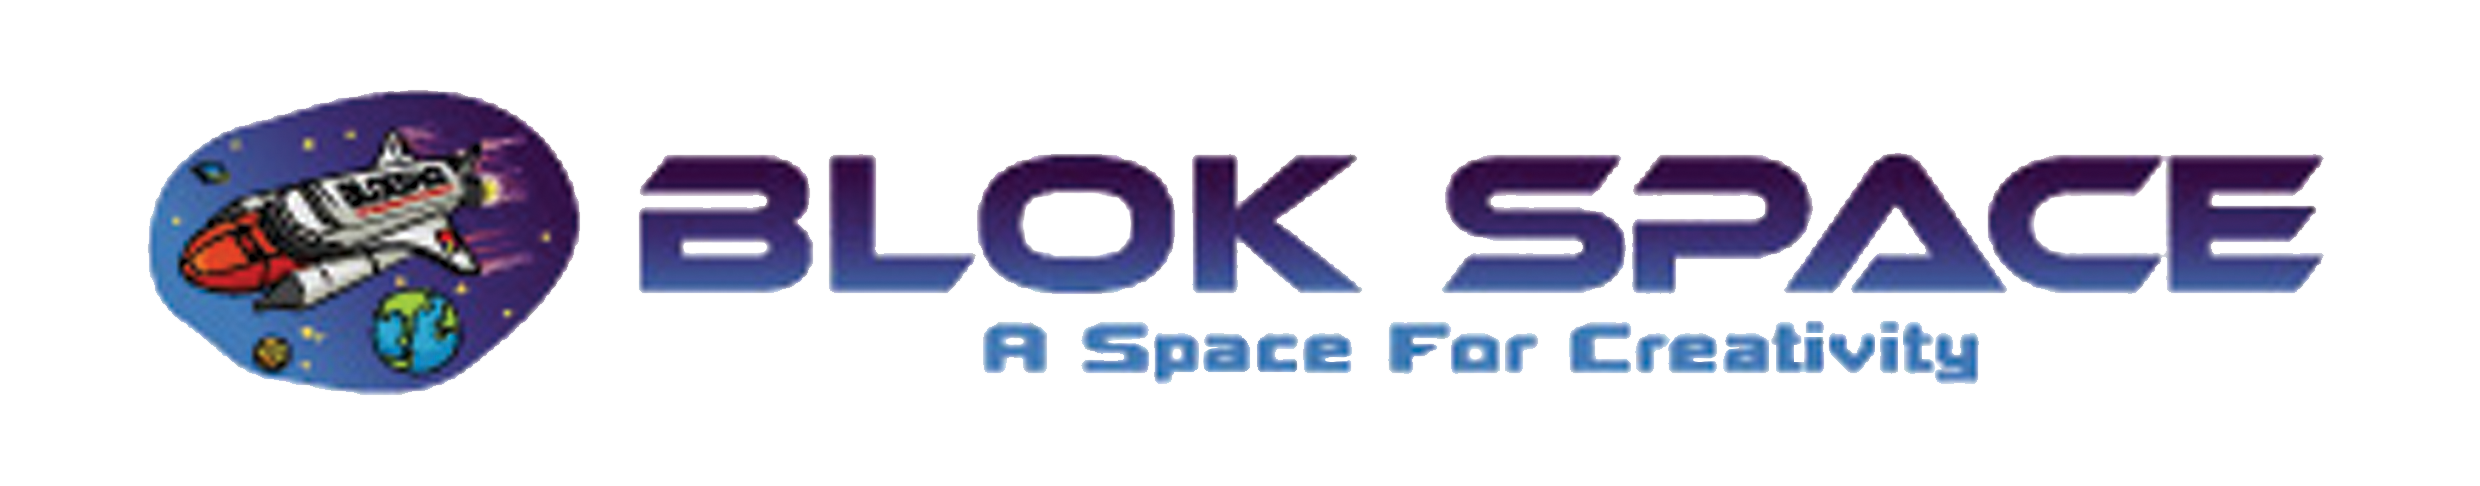 blokspace logo